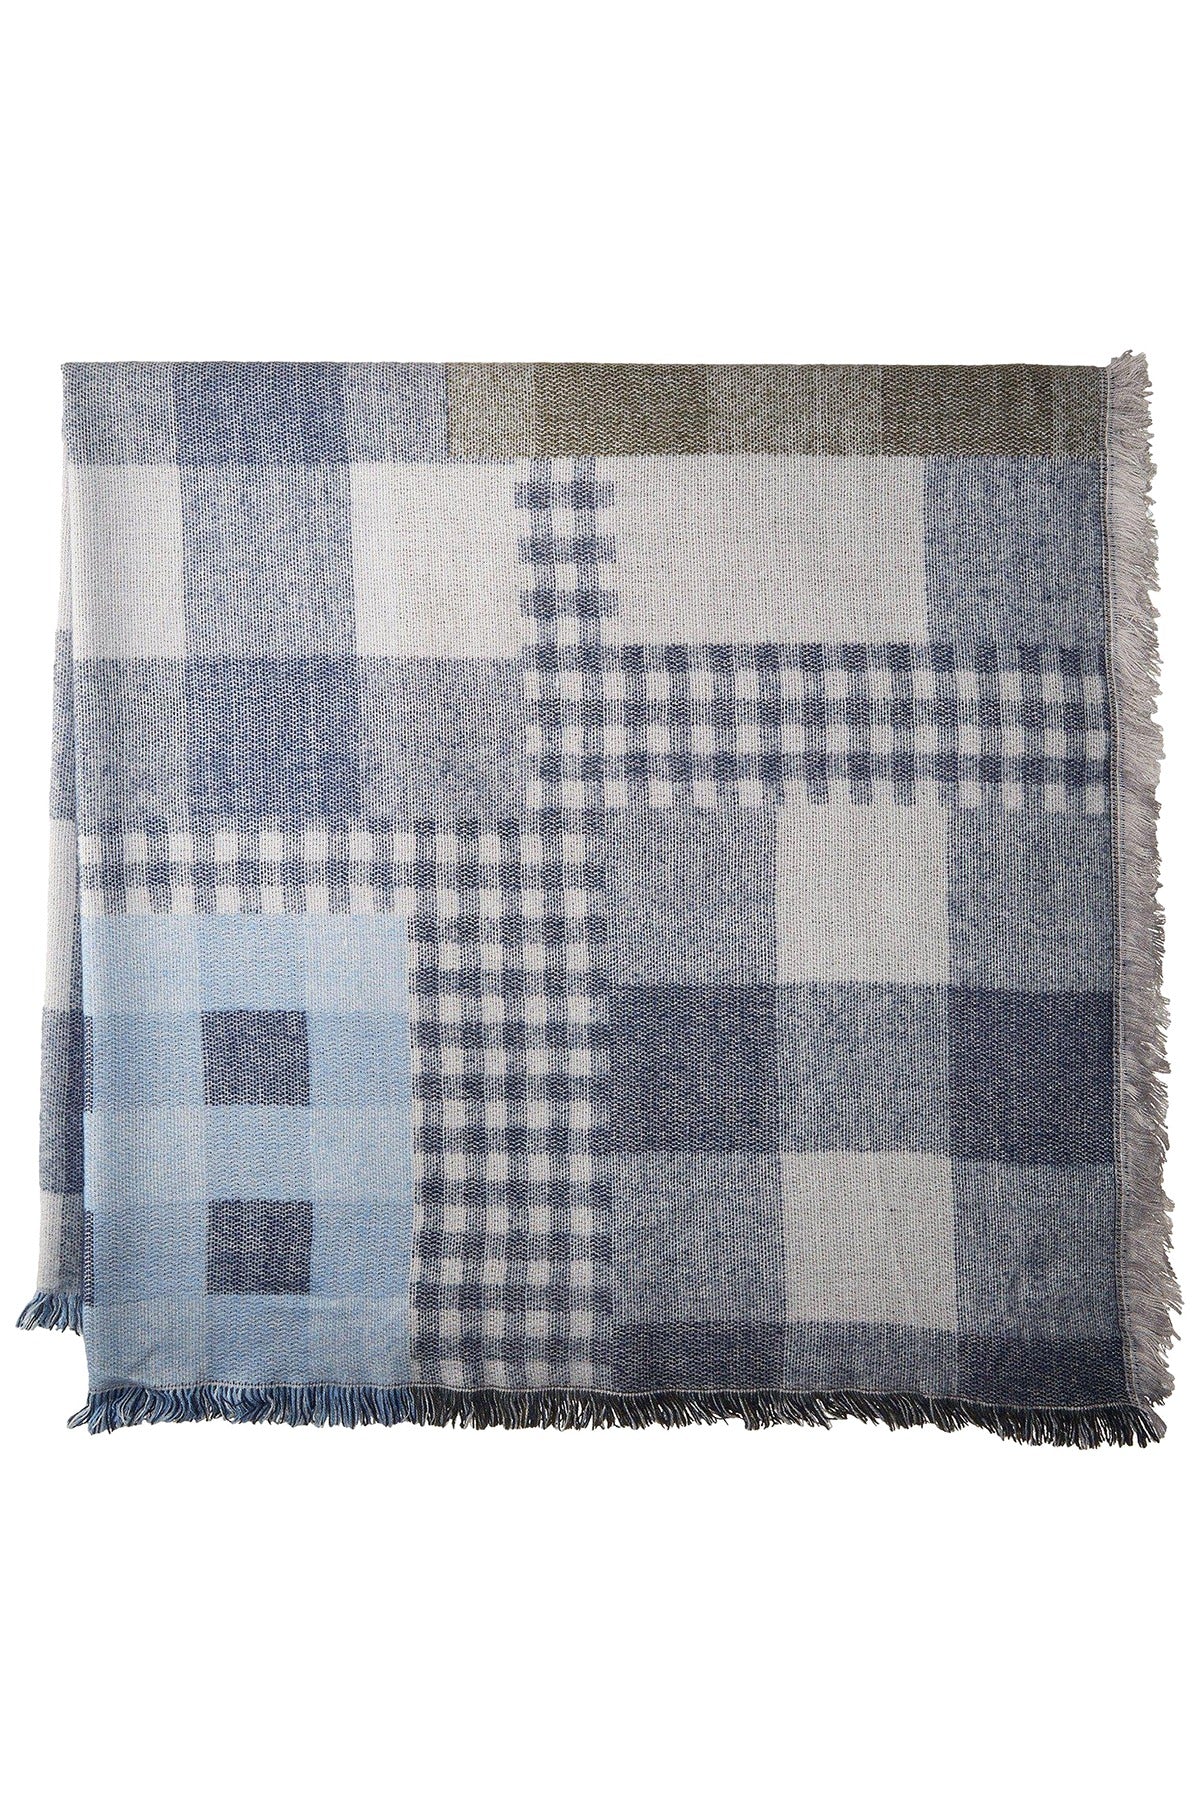 Steve Madden Denim Plaid Variety Blanket, Wrap / Scarf